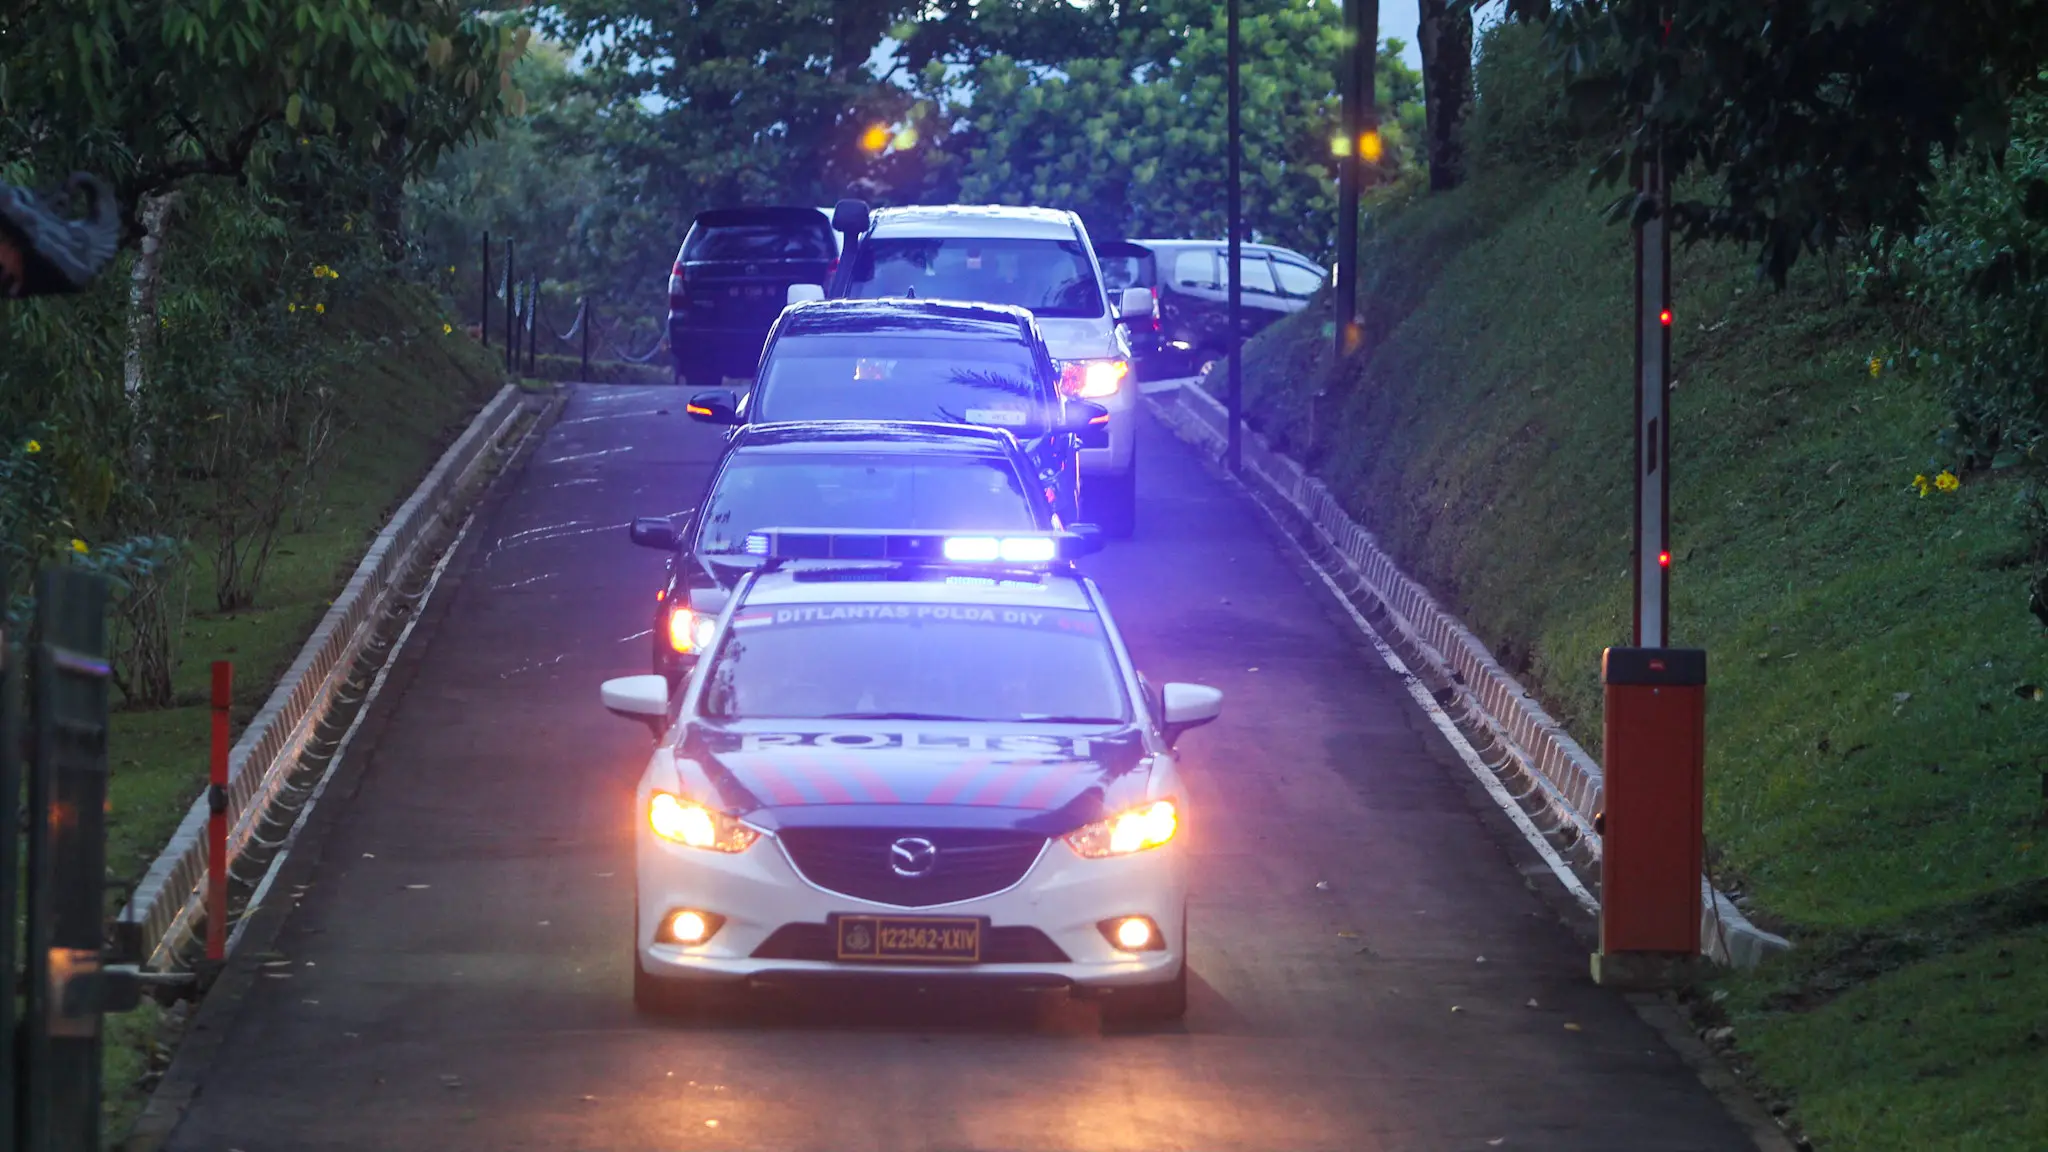 Barisan mobil pengawal kedatangan Presiden AS ke 44 Barrack Obama ketika memasuki kompleks Taman Wisata Candi Borobudur. (foto : Liputan6.com / fajar abrori)